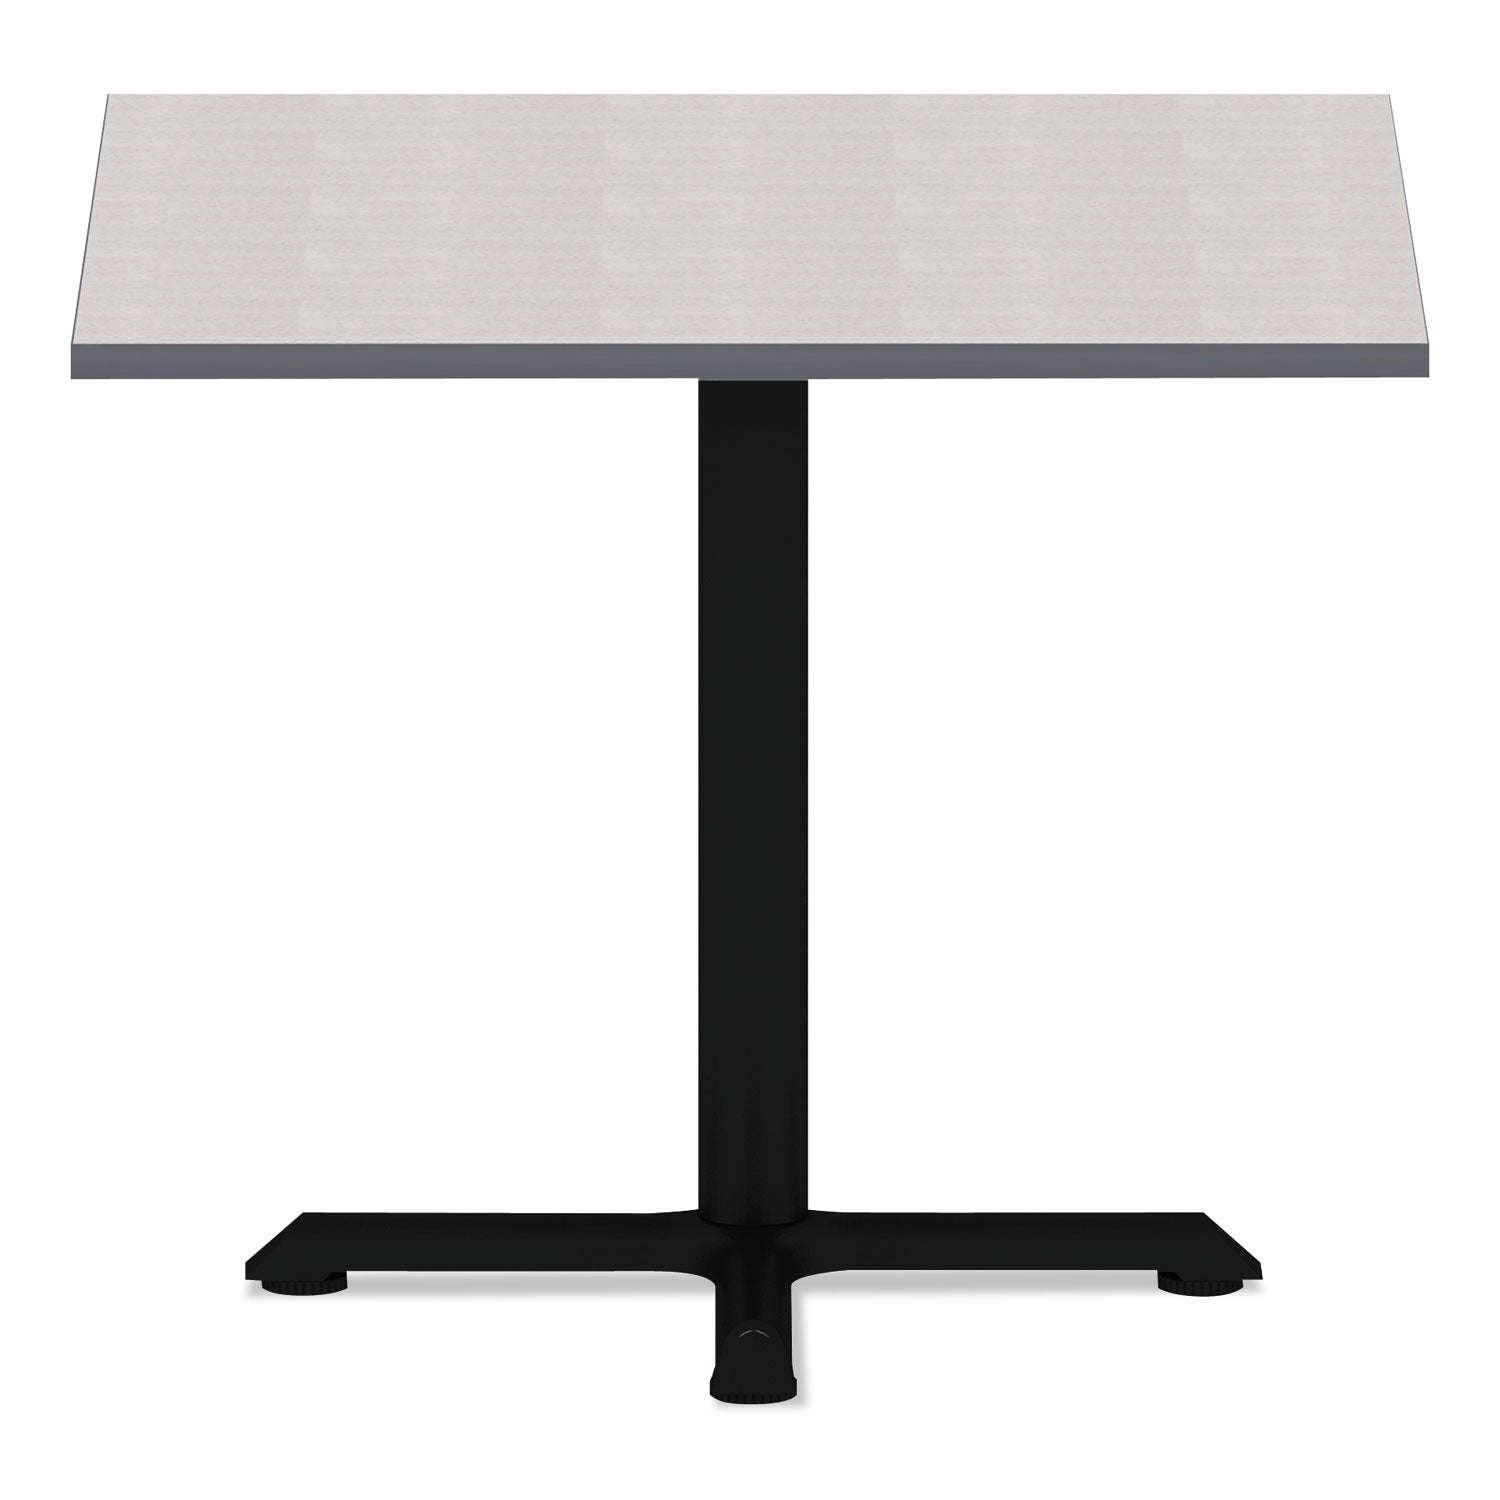 reversible-laminate-table-top-square-3538w-x-3538d-white-gray_alettsq36wg - 2